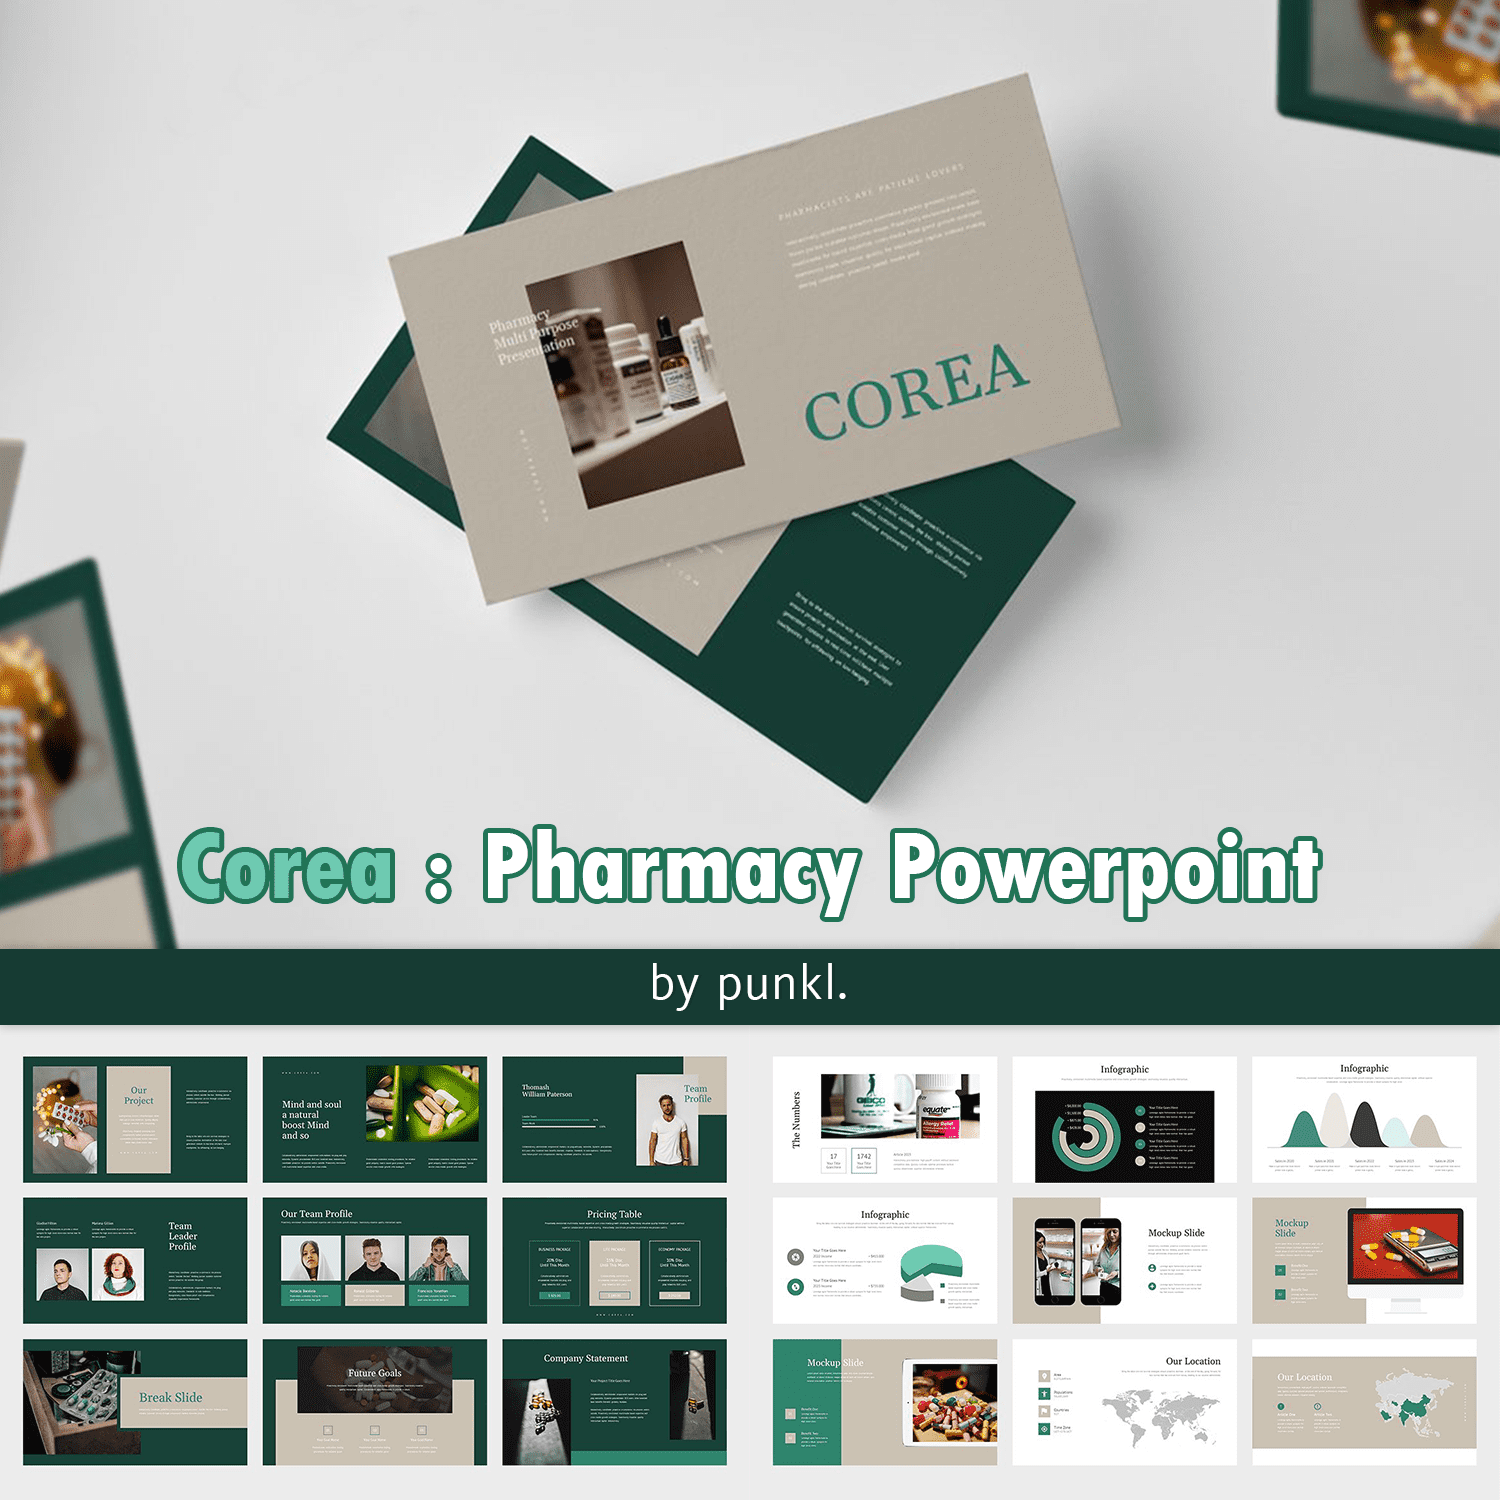 Corea : Pharmacy Powerpoint cover.